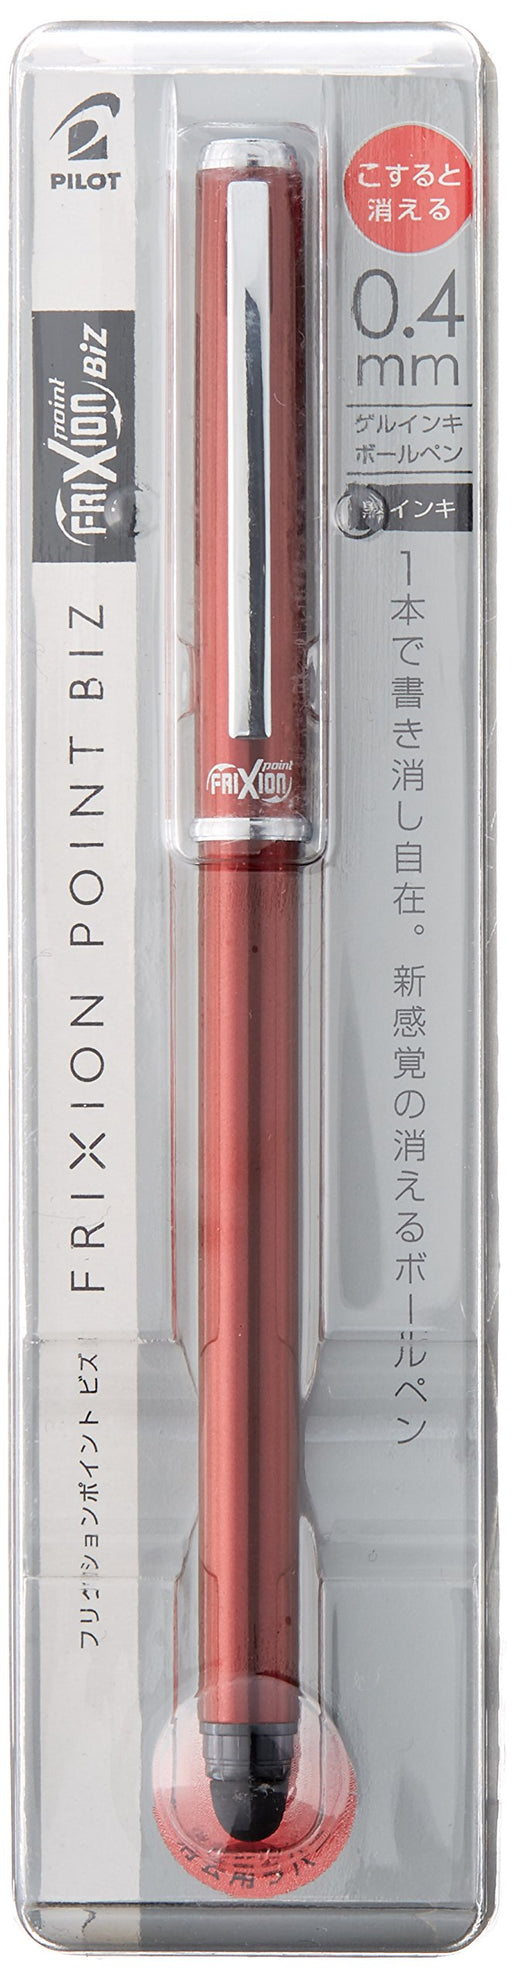 PILOT Ballpoint Pen Frixion Point Biz Metallic Red LF-2SP4-MR erasable pen NEW_1